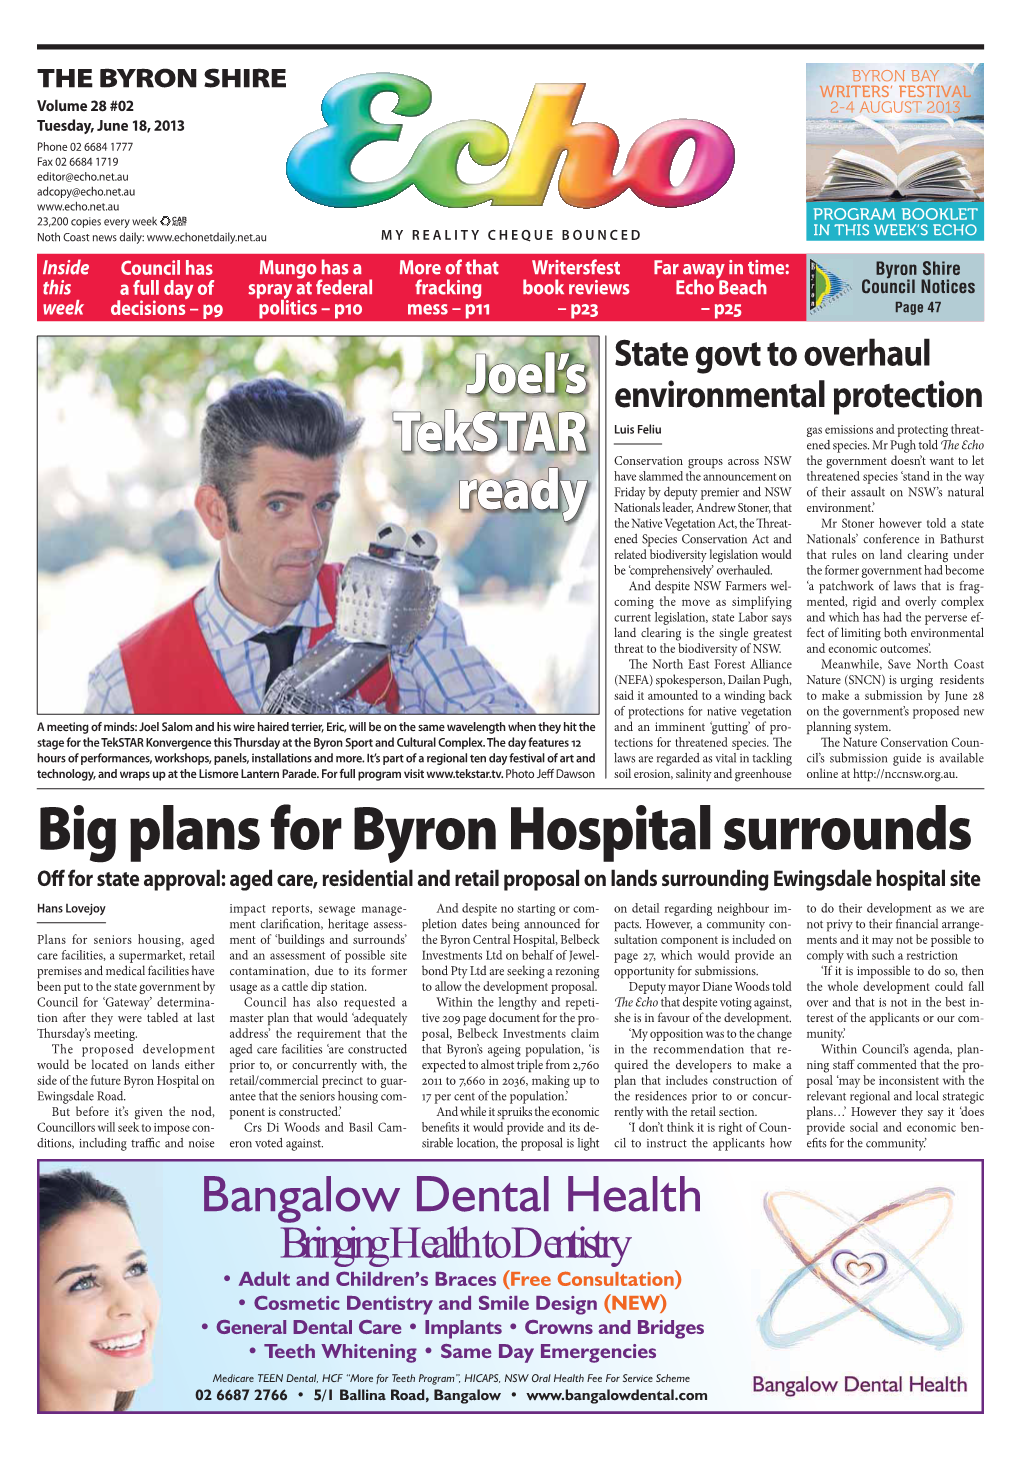 Big Plans for Byron Hospital Surrounds